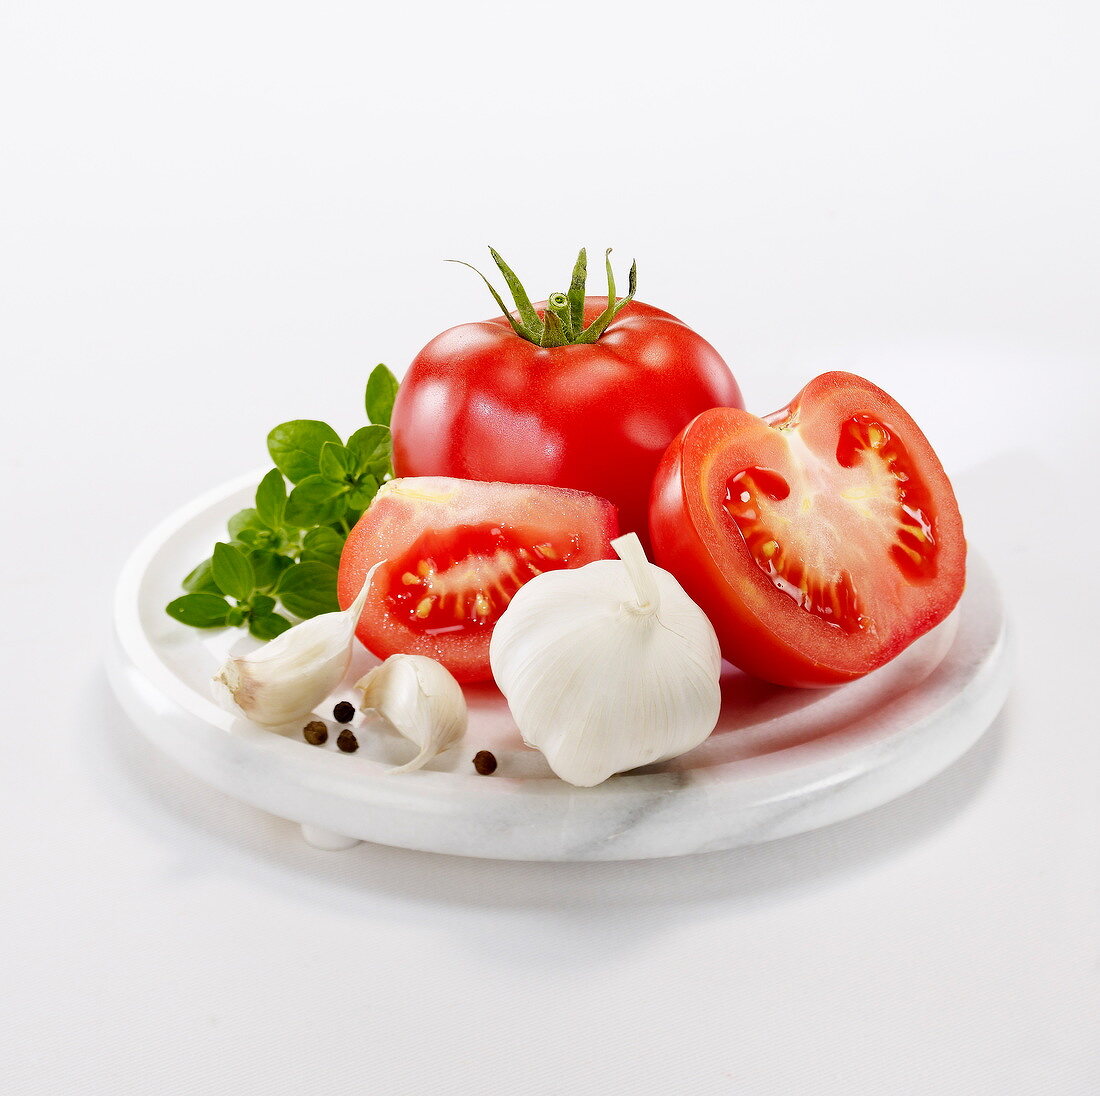 Tomatoes,garlic,basil and pepper